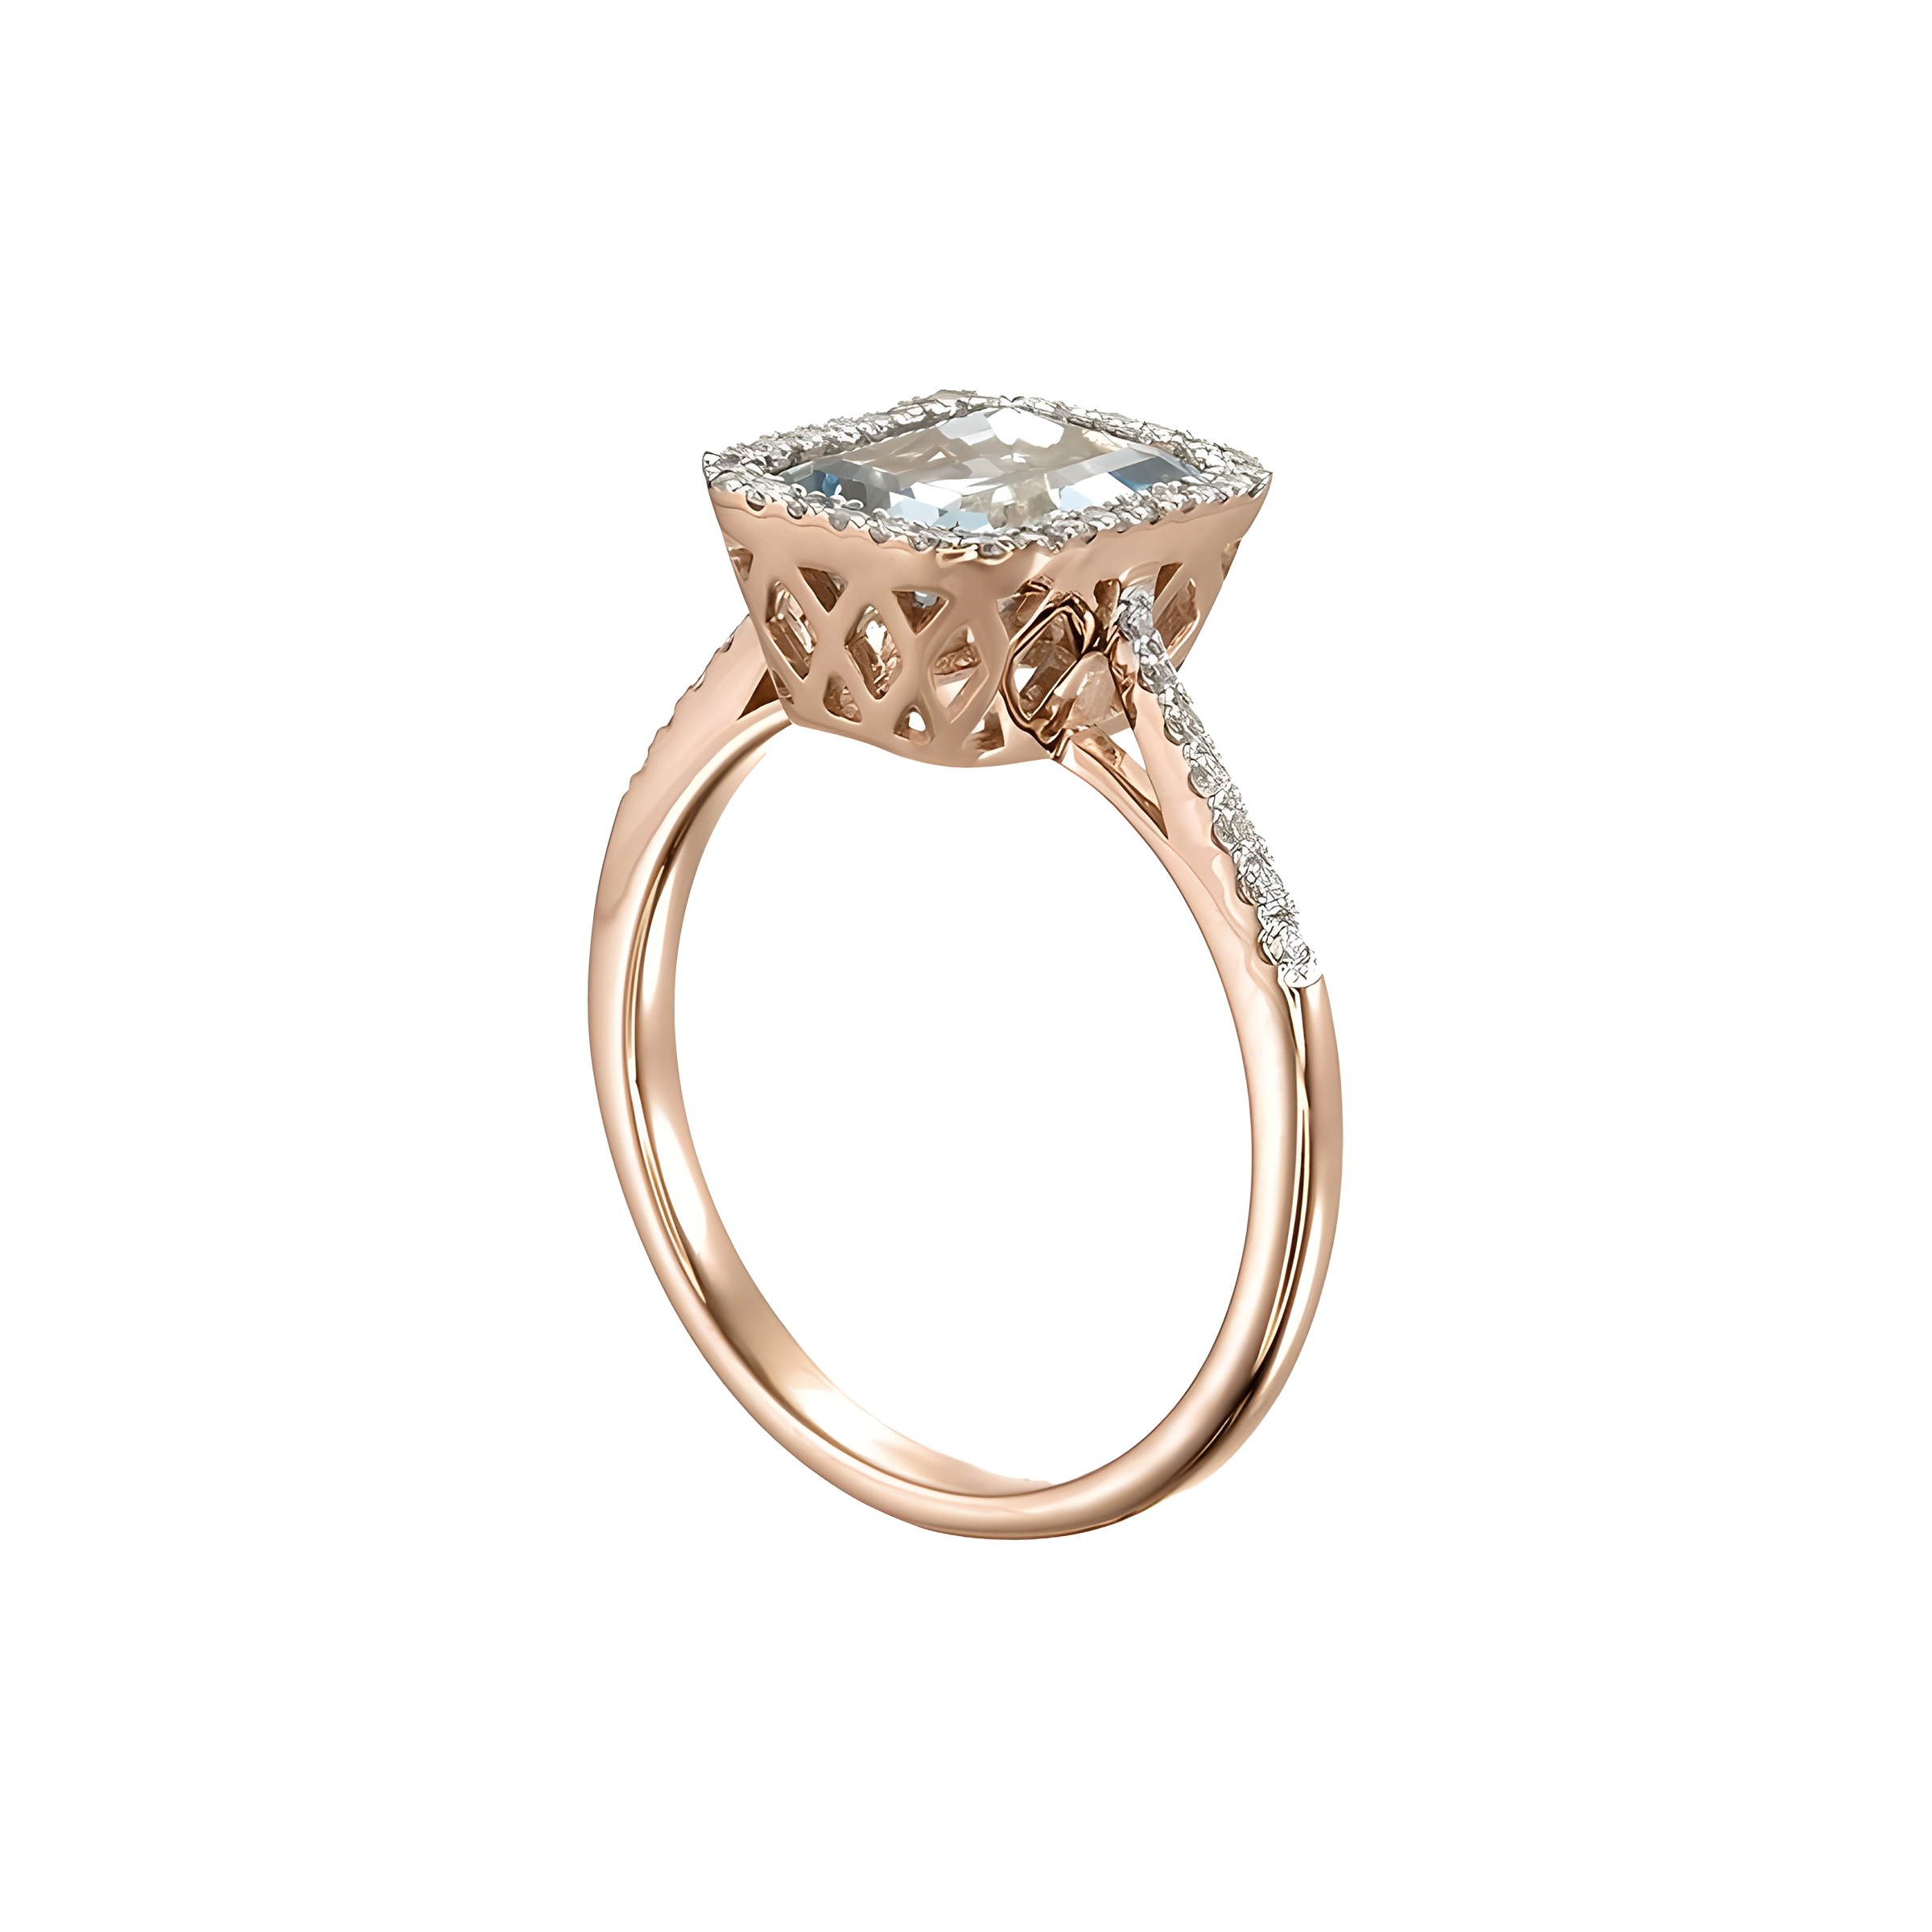 Octagon Aquamarine and Diamond Halo Ring in 18k Rose Gold